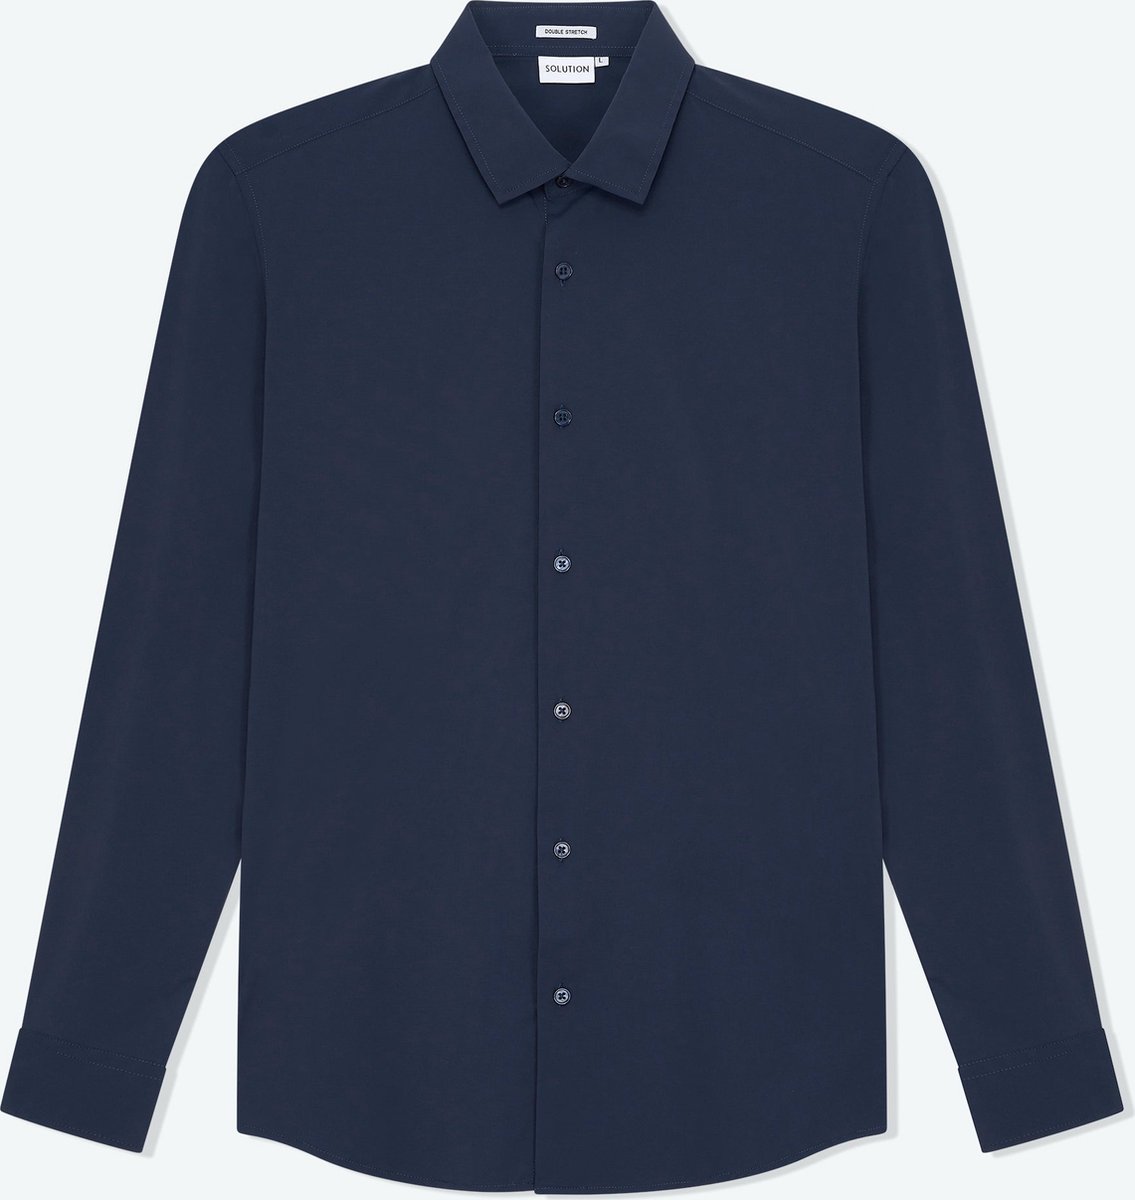 Solution Clothing Felix - Casual Overhemd - Kreukvrij - Lange Mouw - Volwassenen - Heren - Mannen - Navy - M - M - Solution Clothing